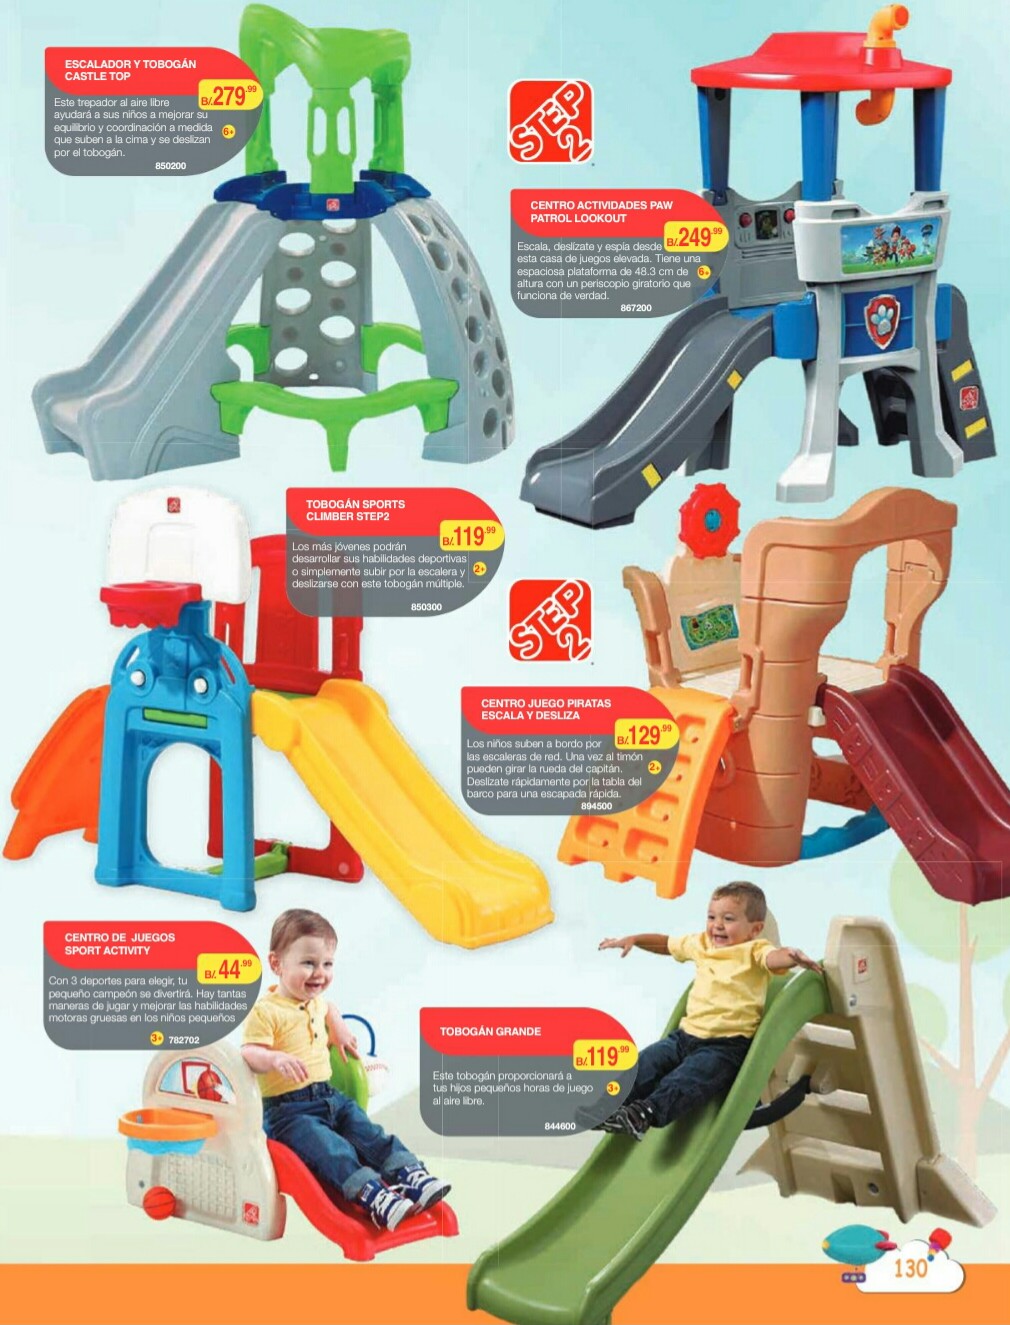 Catalogo juguetes Titan Toys 2018 p132